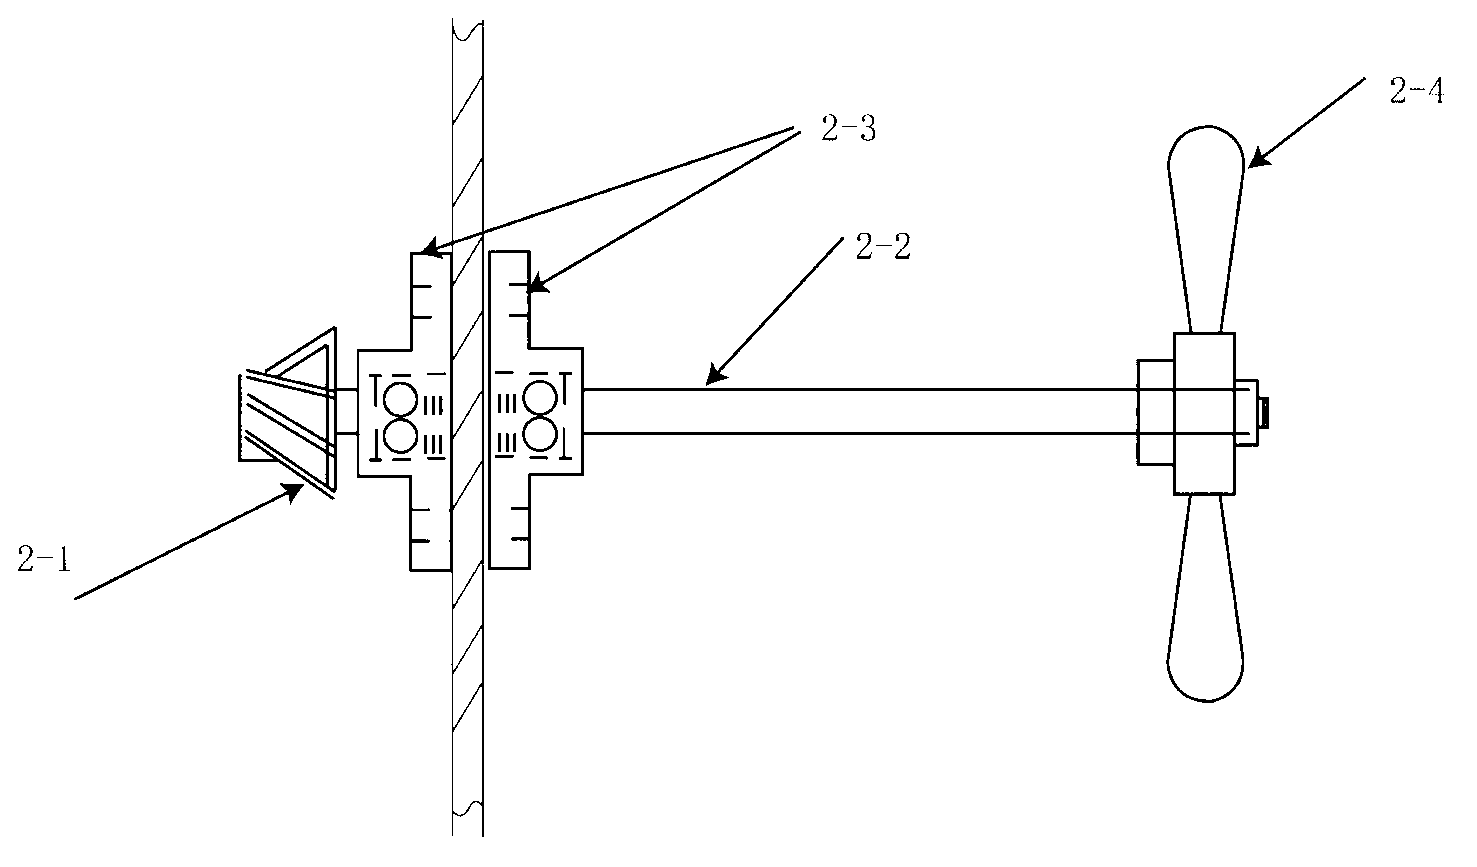 OLED (organic light-emitting diode) coating machine with dual-rotation mechanism